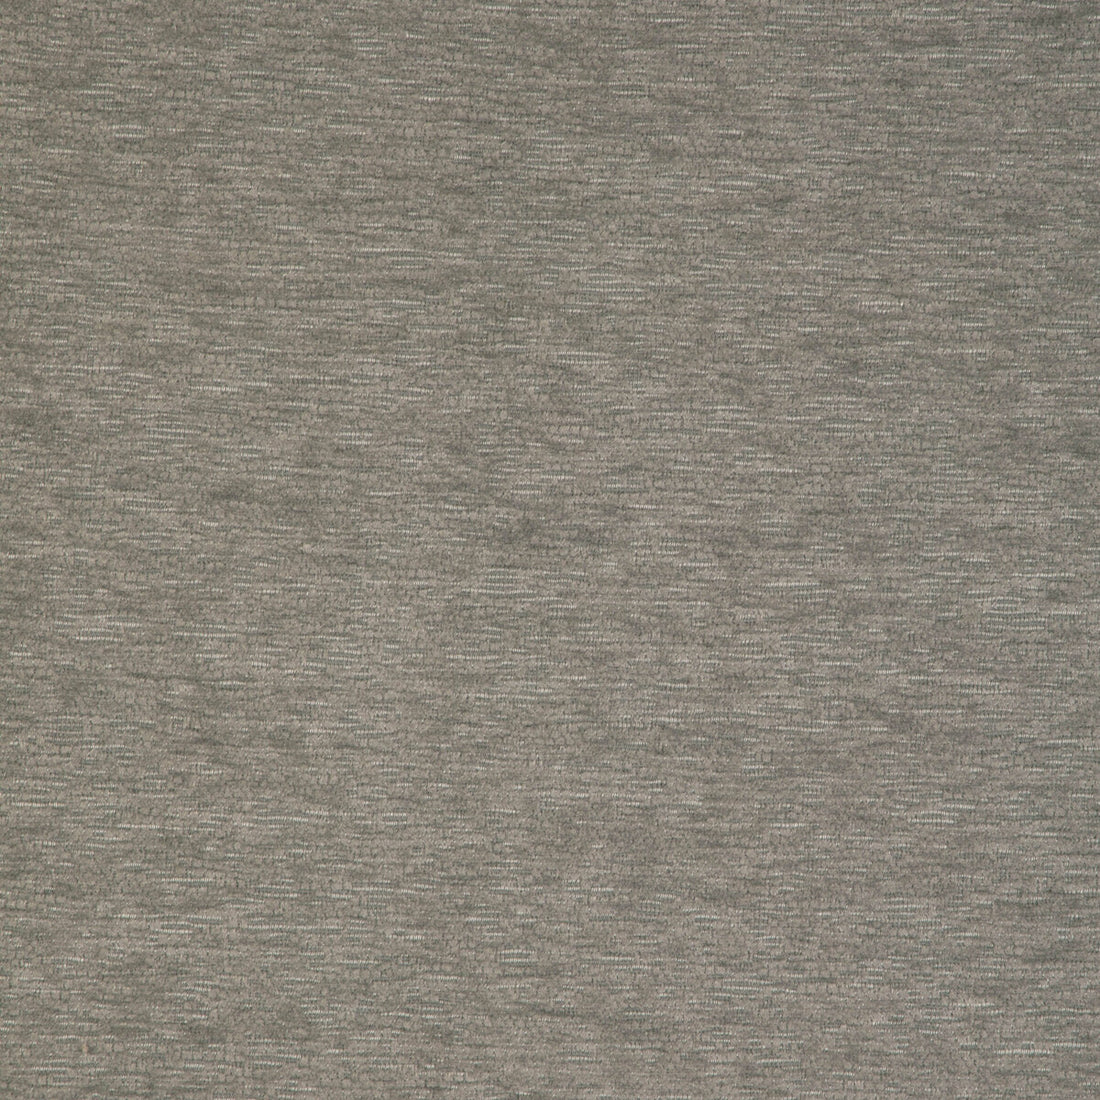 Kravet Smart fabric in 37002-11 color - pattern 37002.11.0 - by Kravet Smart in the Pavilion collection